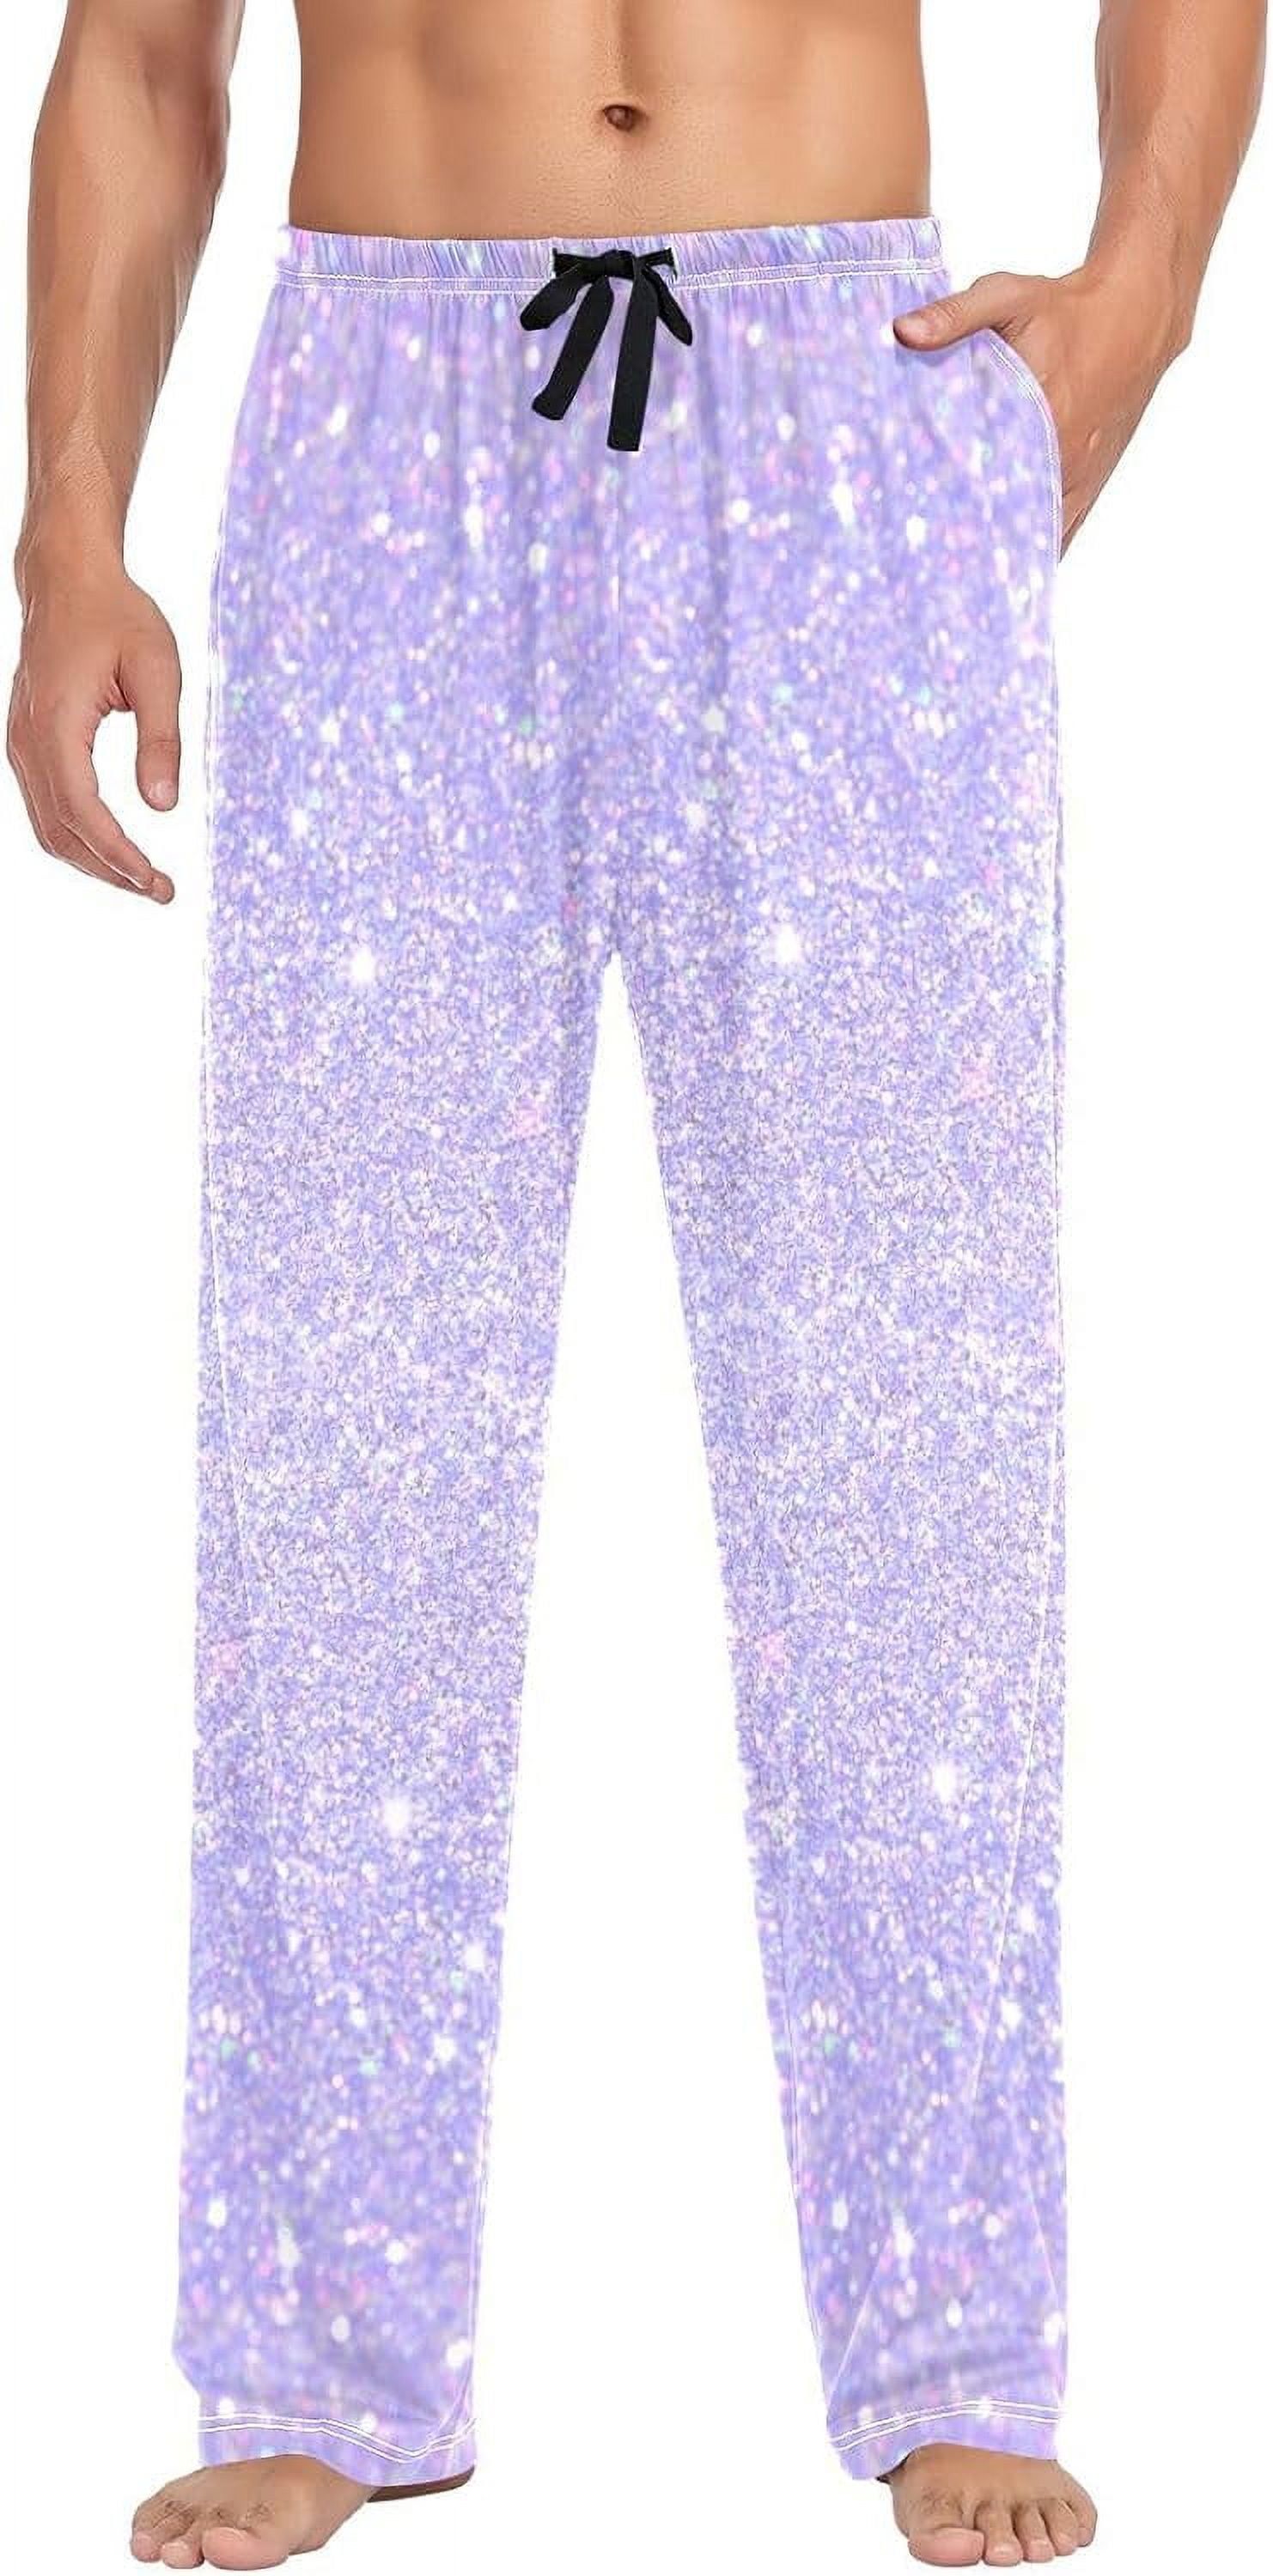 FREEAMG Men's Cotton Pajama Pants Lounge Sleep Pants Soft Sleepwear ...